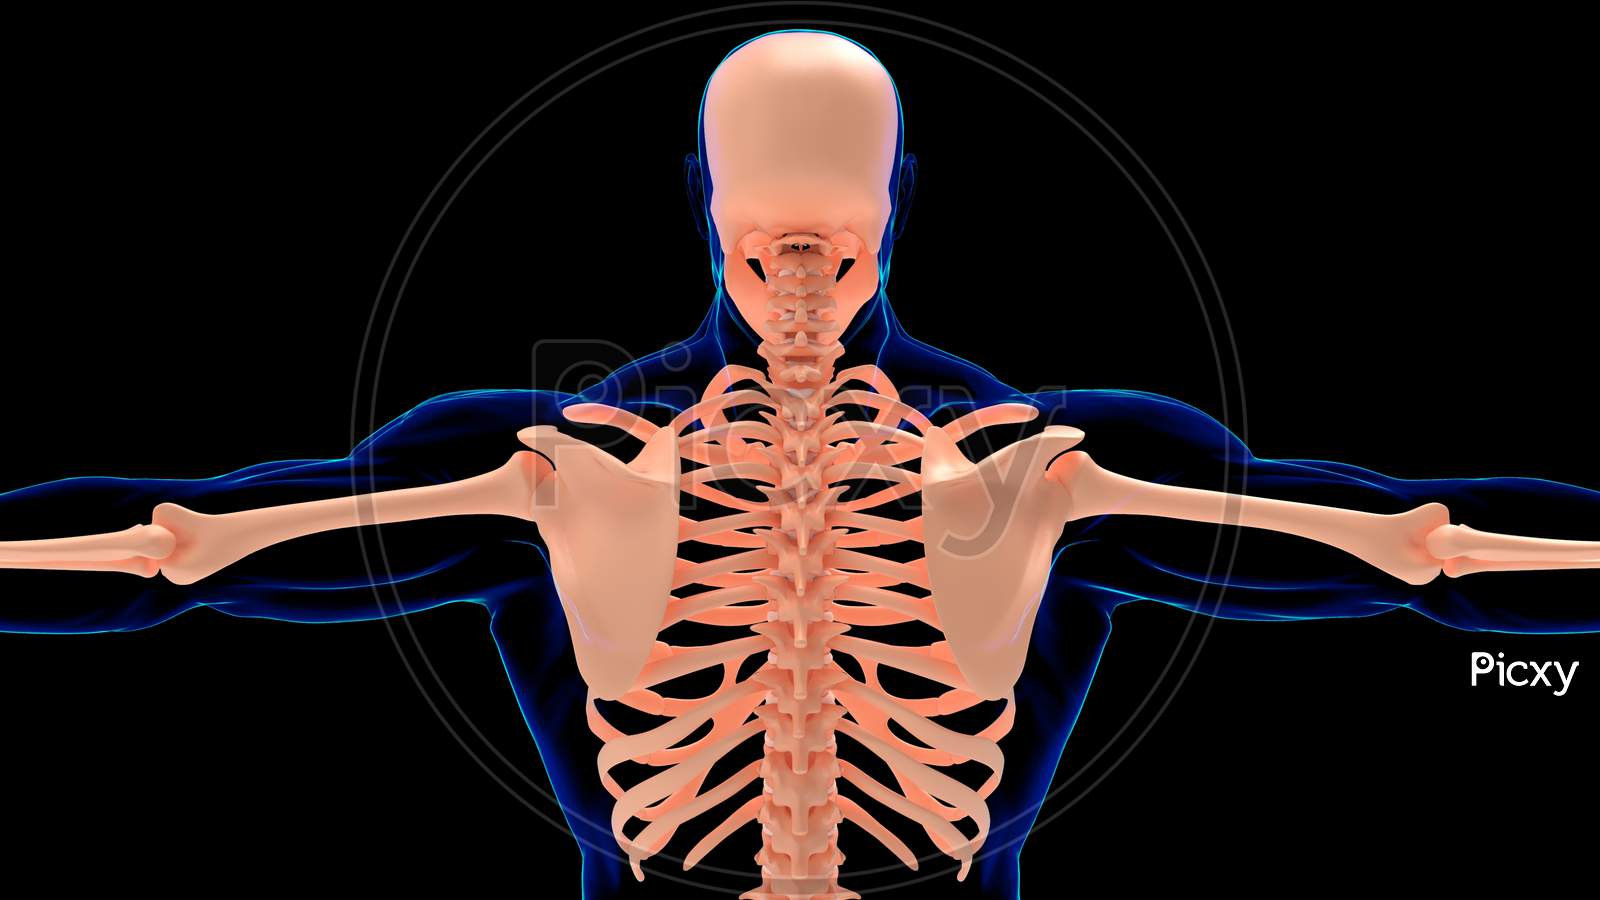 Human Skeleton Anatomy Back View For Medical Concept 3D